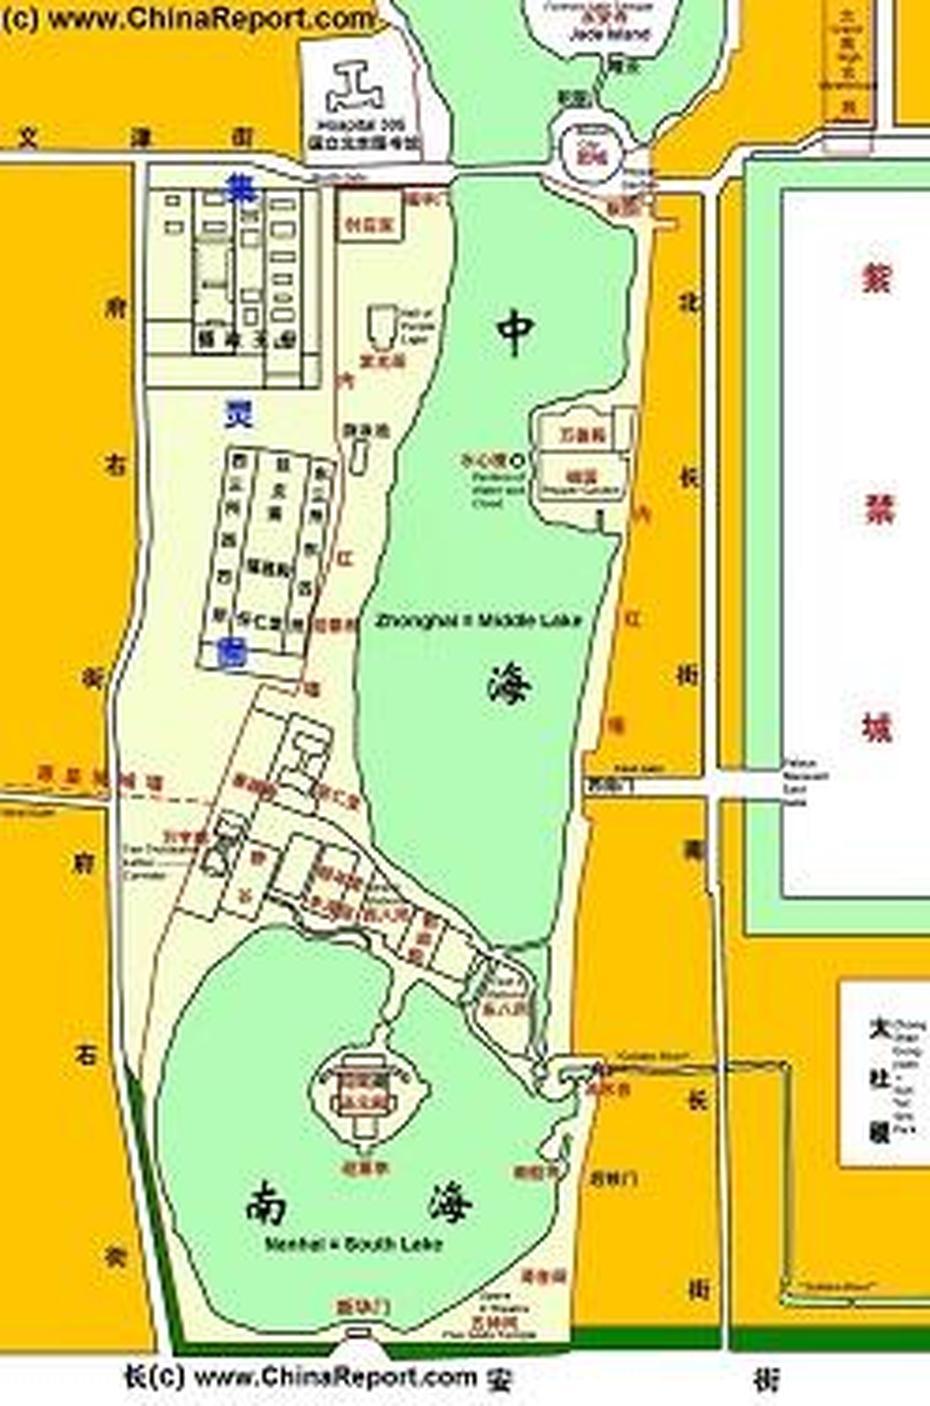 Beijing Xicheng District – Maps Index, All Maps Menu, Xicheng, China, Beijing City, Beijing  English